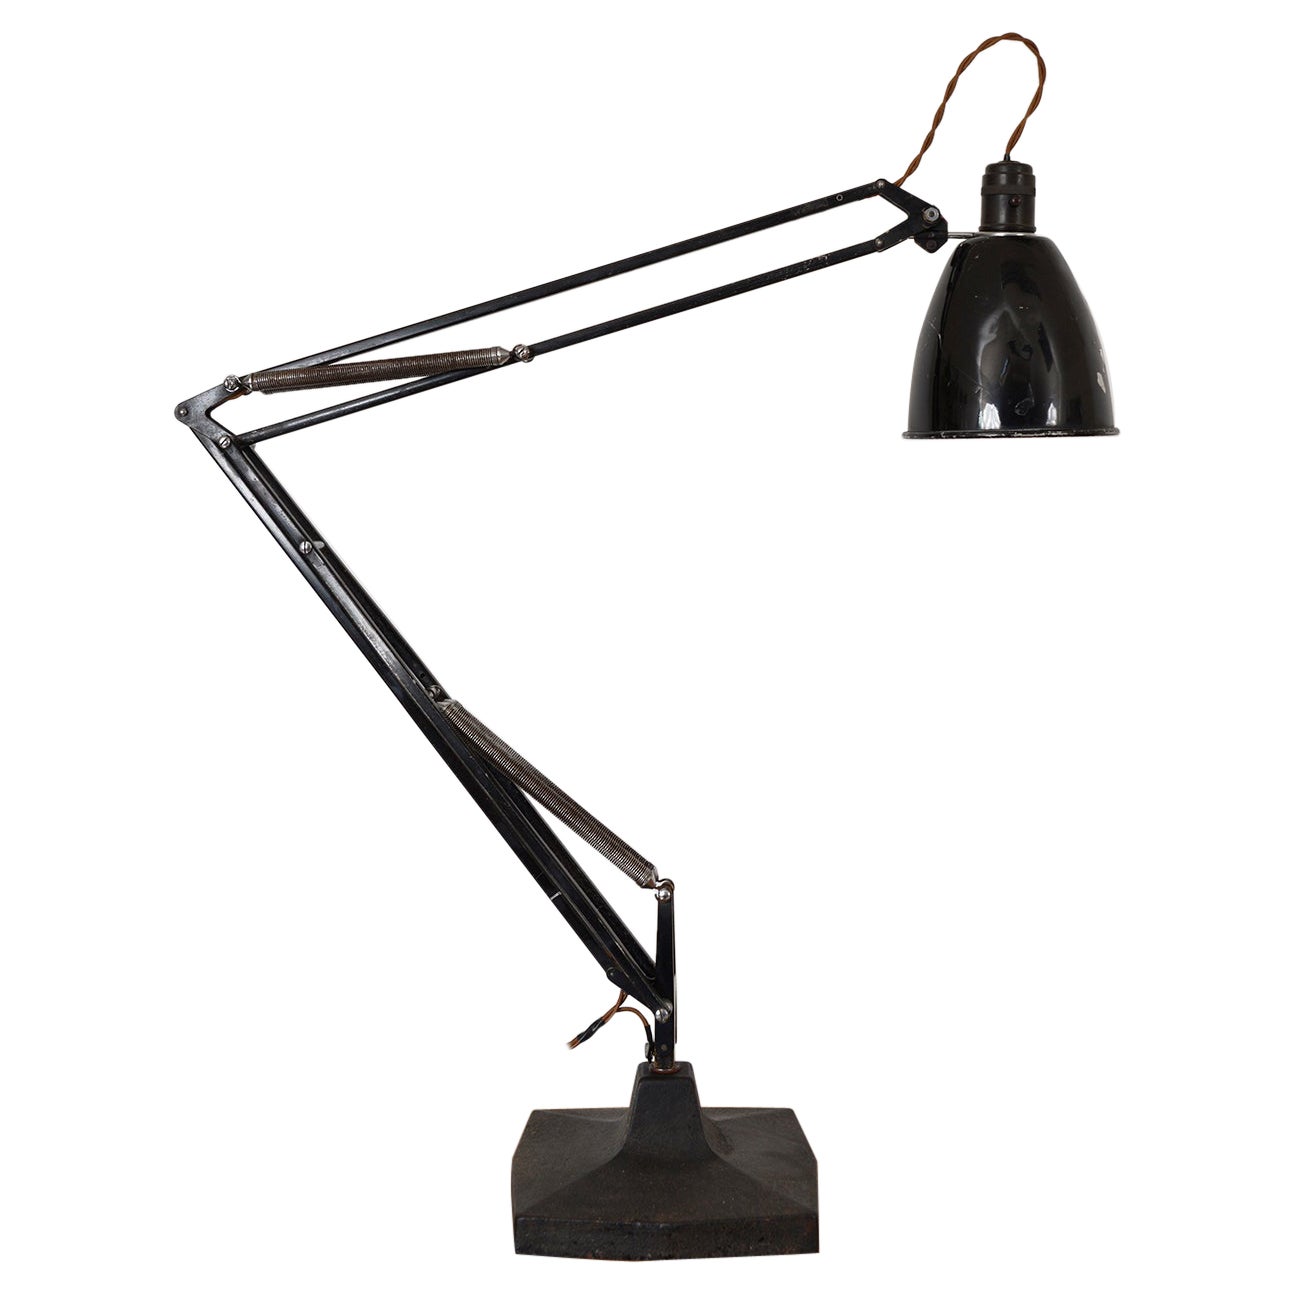 1940s Herbert Terry Anglepoise Draughtsman's Task Desk Lamp No 1209 Industrial